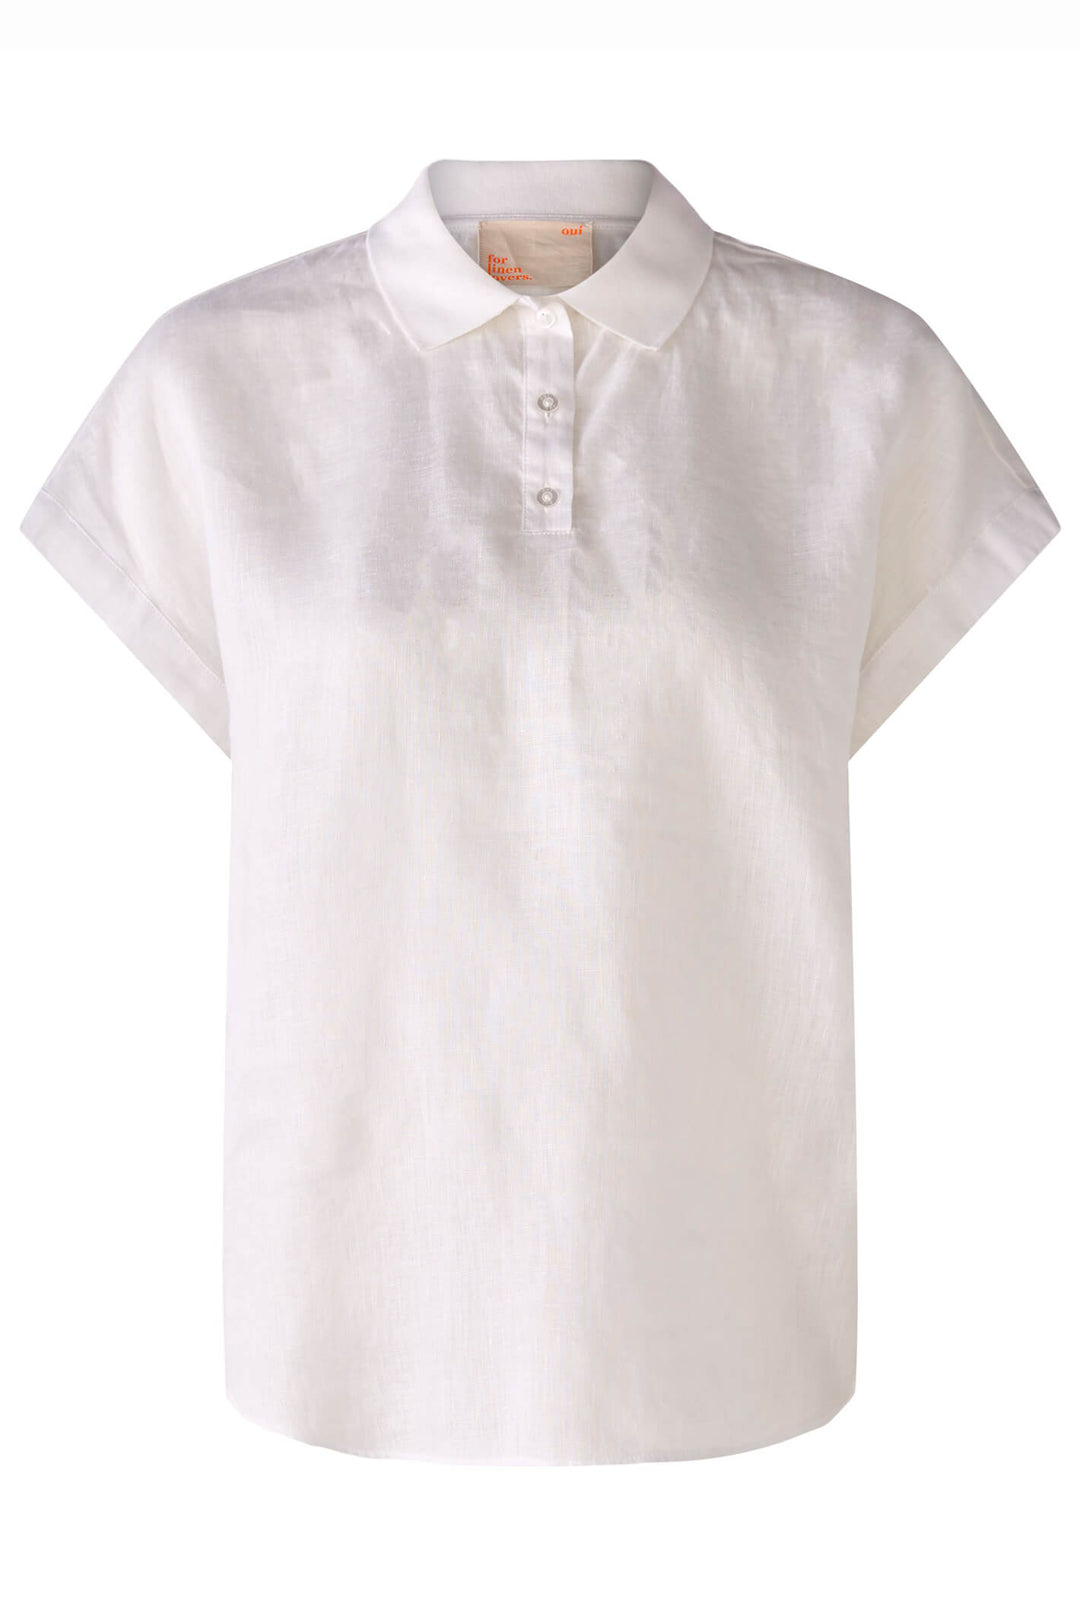 Oui 78899 Optic White Linen Cotton Duo Blouse - Shirley Allum Boutique